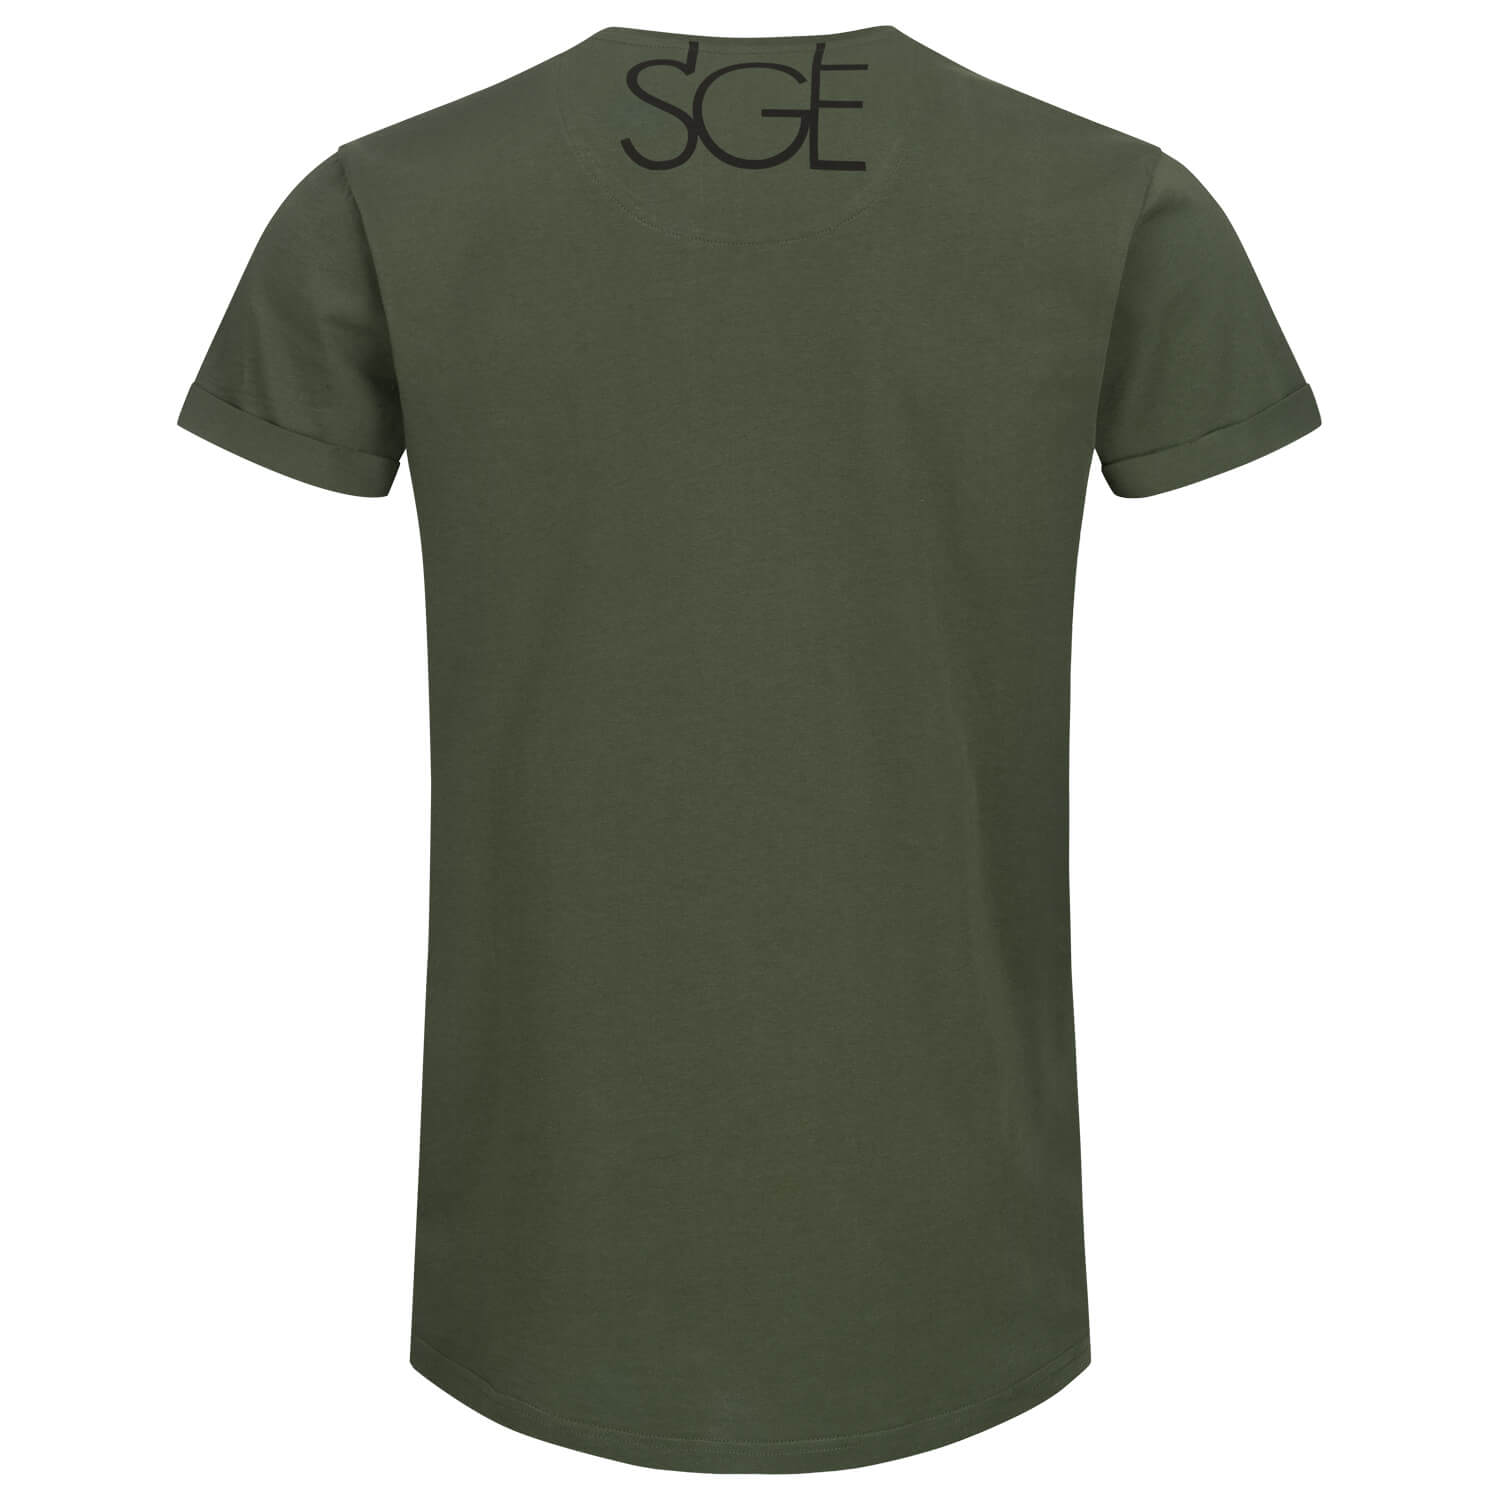 Bild 2: T-Shirt SGE olive